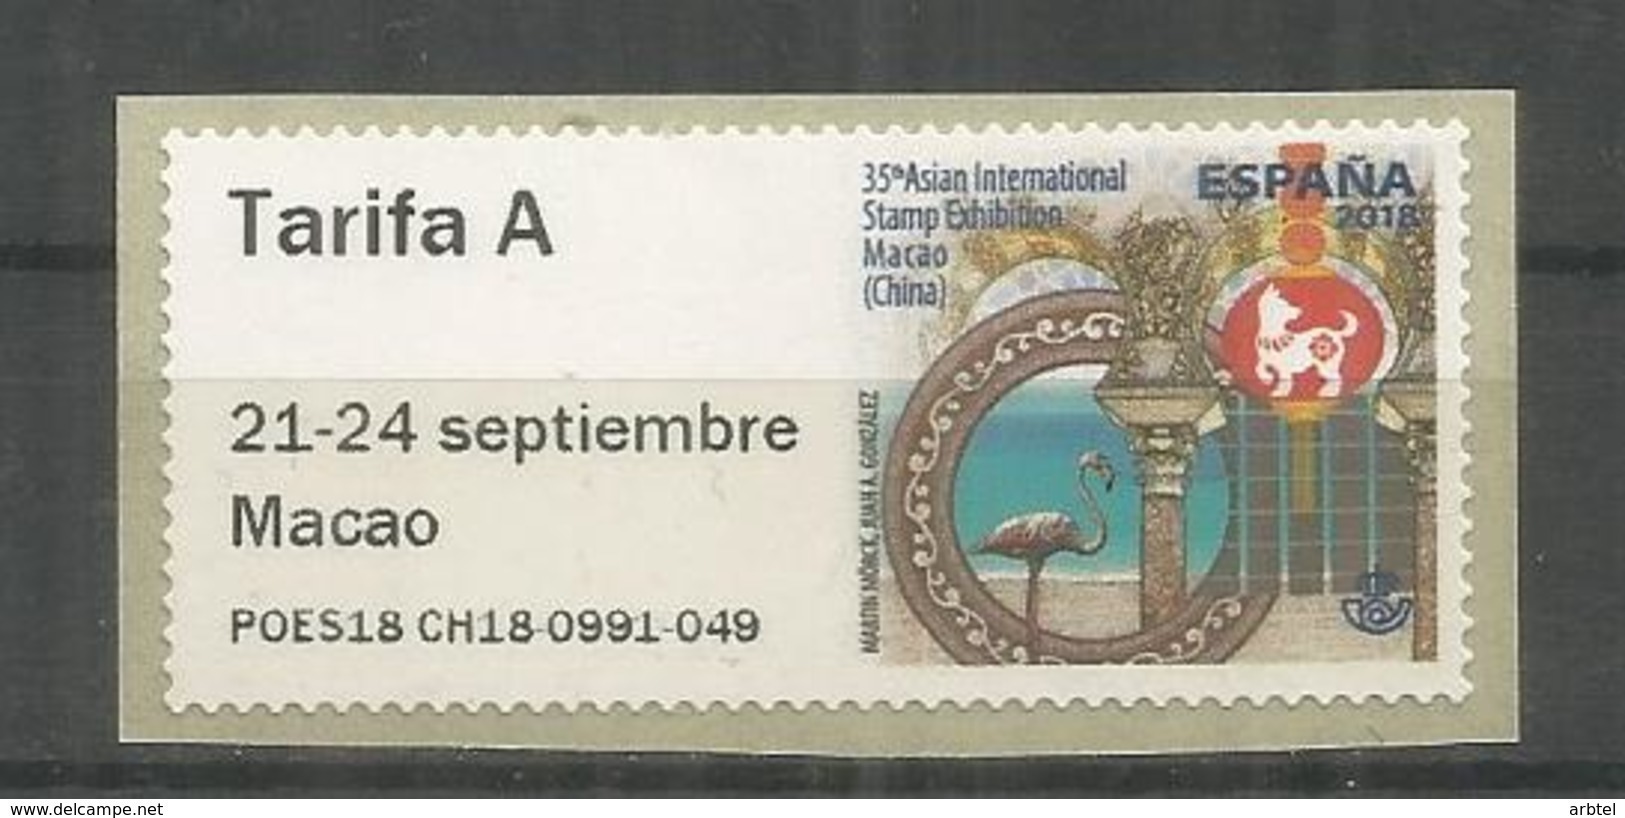 ESPAÑA SPAIN 2018 ATM MACAO CHINA INTERNATIONAL EXHIBITION TARIFA A - Unused Stamps